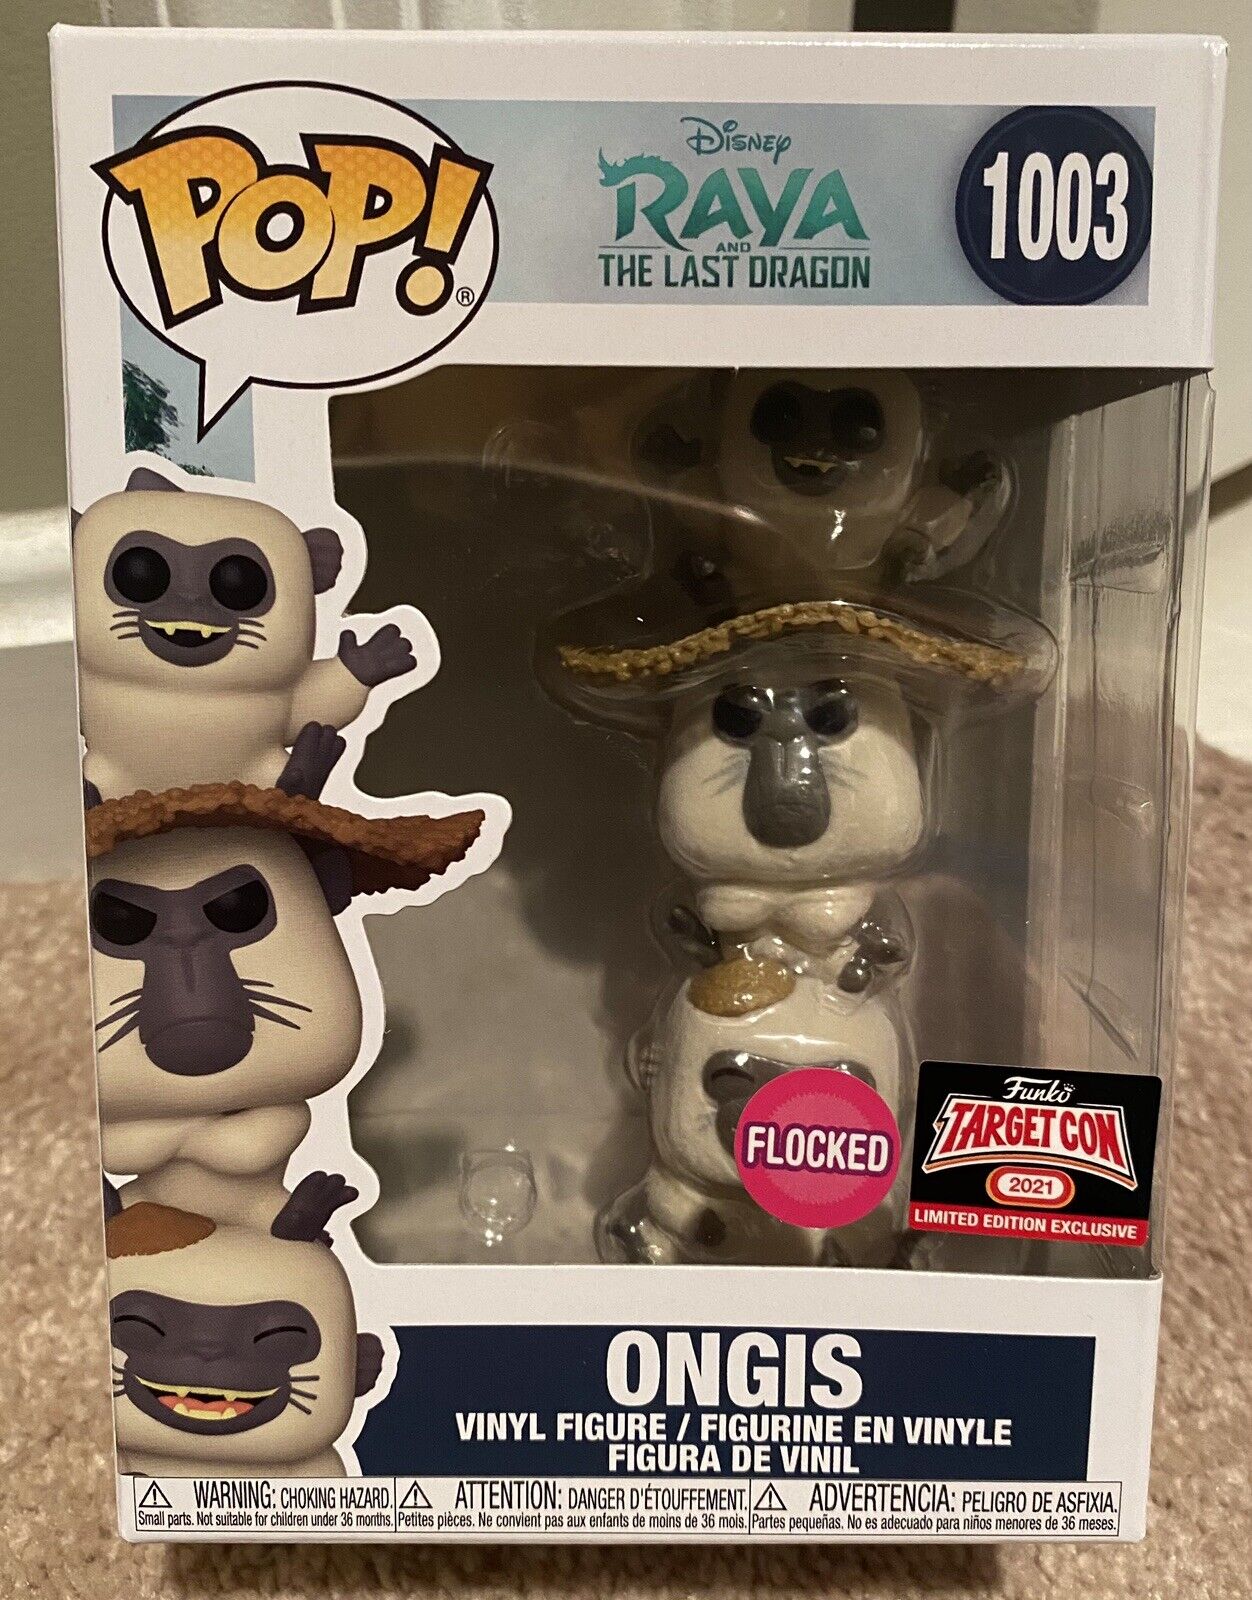 ONGIS (Flocked) #1003 Funko POP Disney Raya and the Last Dragon TargetCon 2021